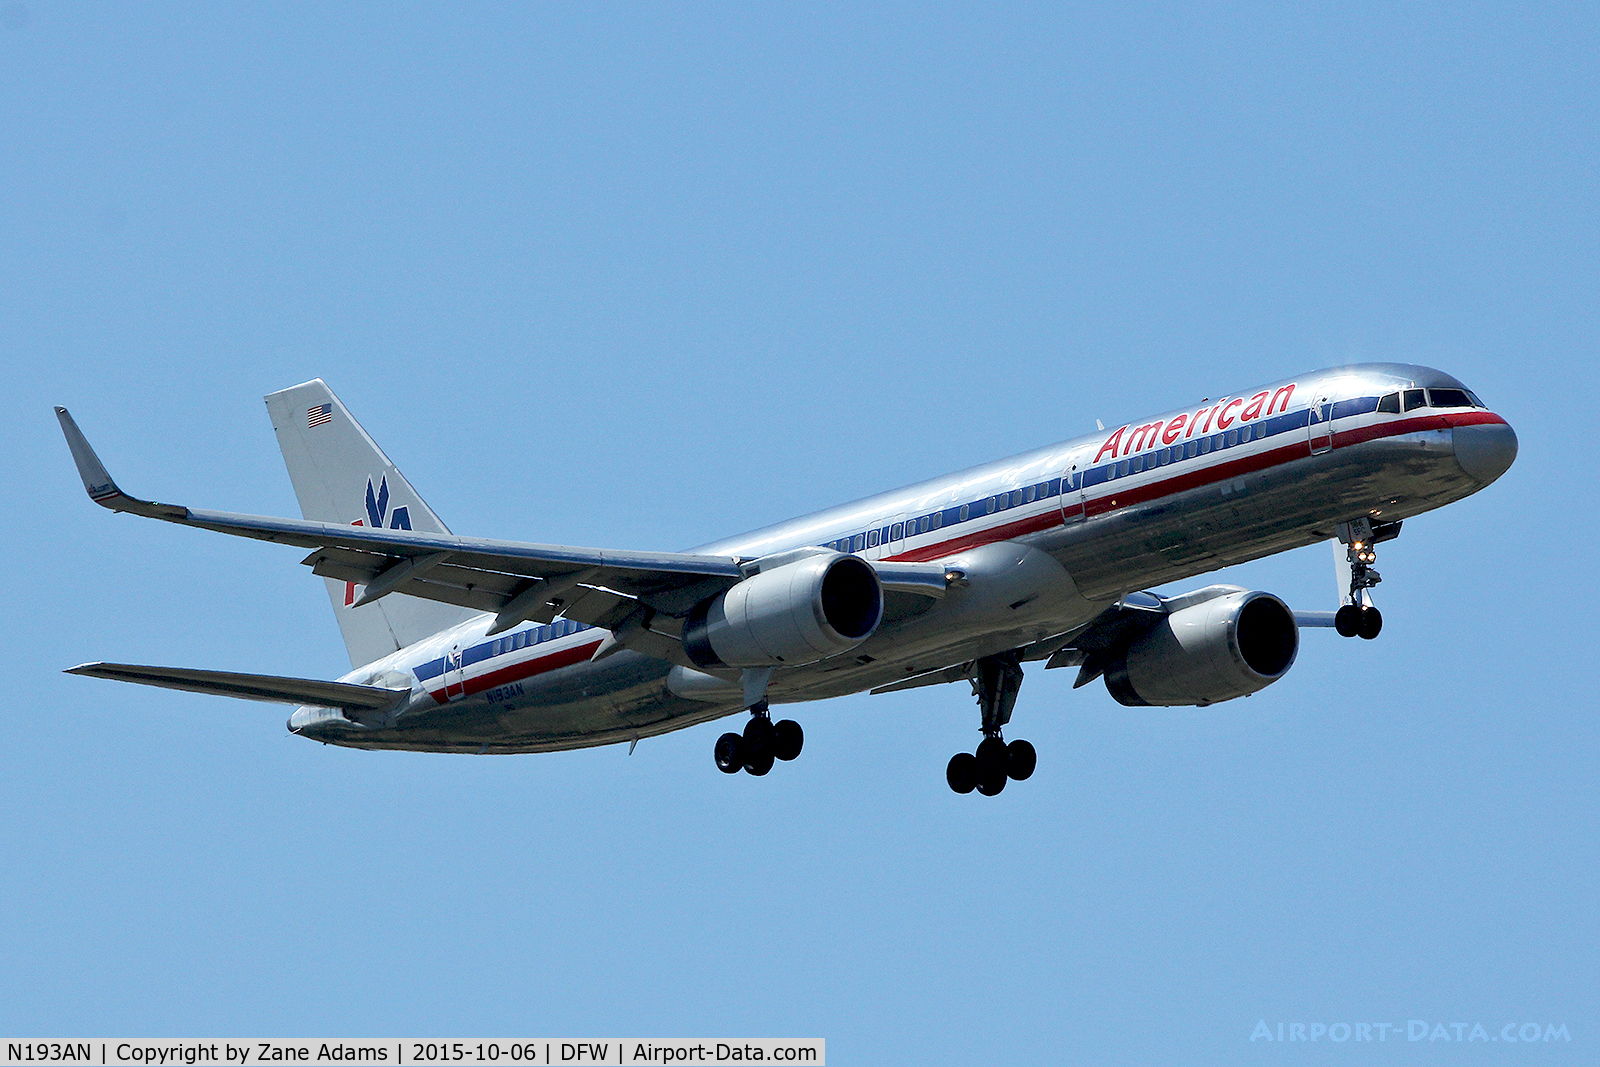 N193AN, 2001 Boeing 757-223 C/N 32387, Arriving at DFW Airport